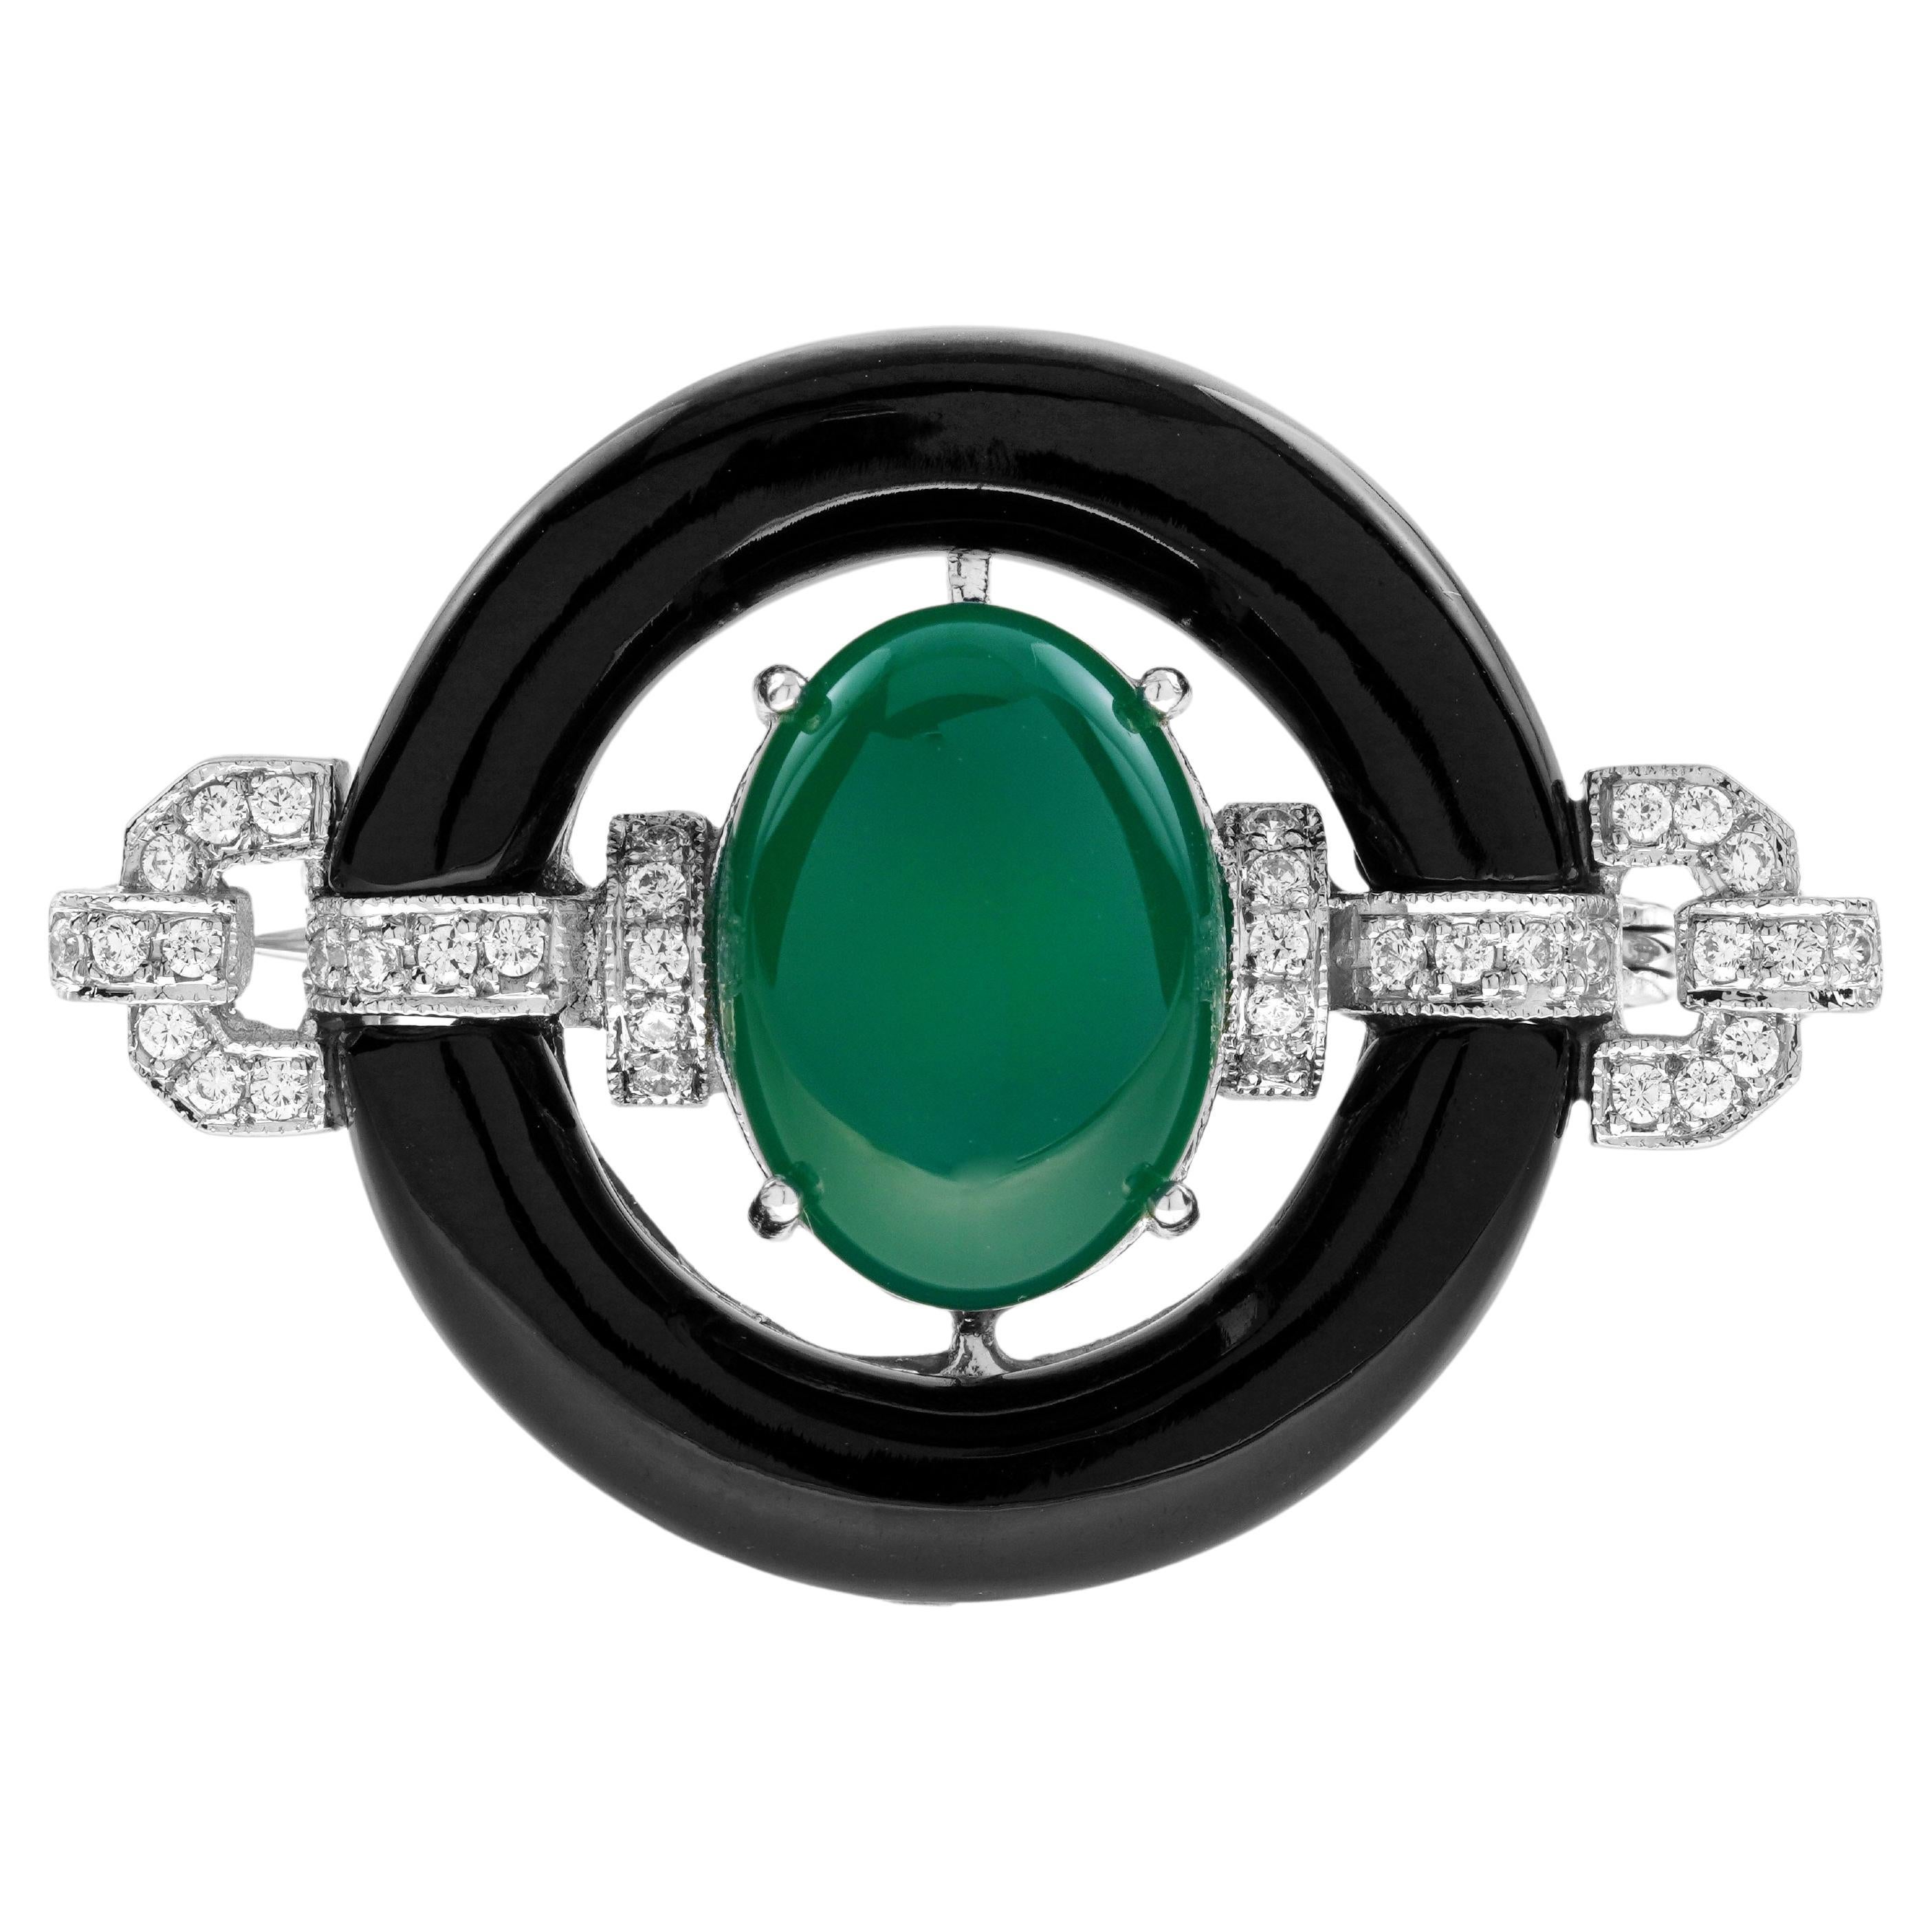 Green Agate Onyx Diamond Art Deco Style Brooch in 14K White Gold